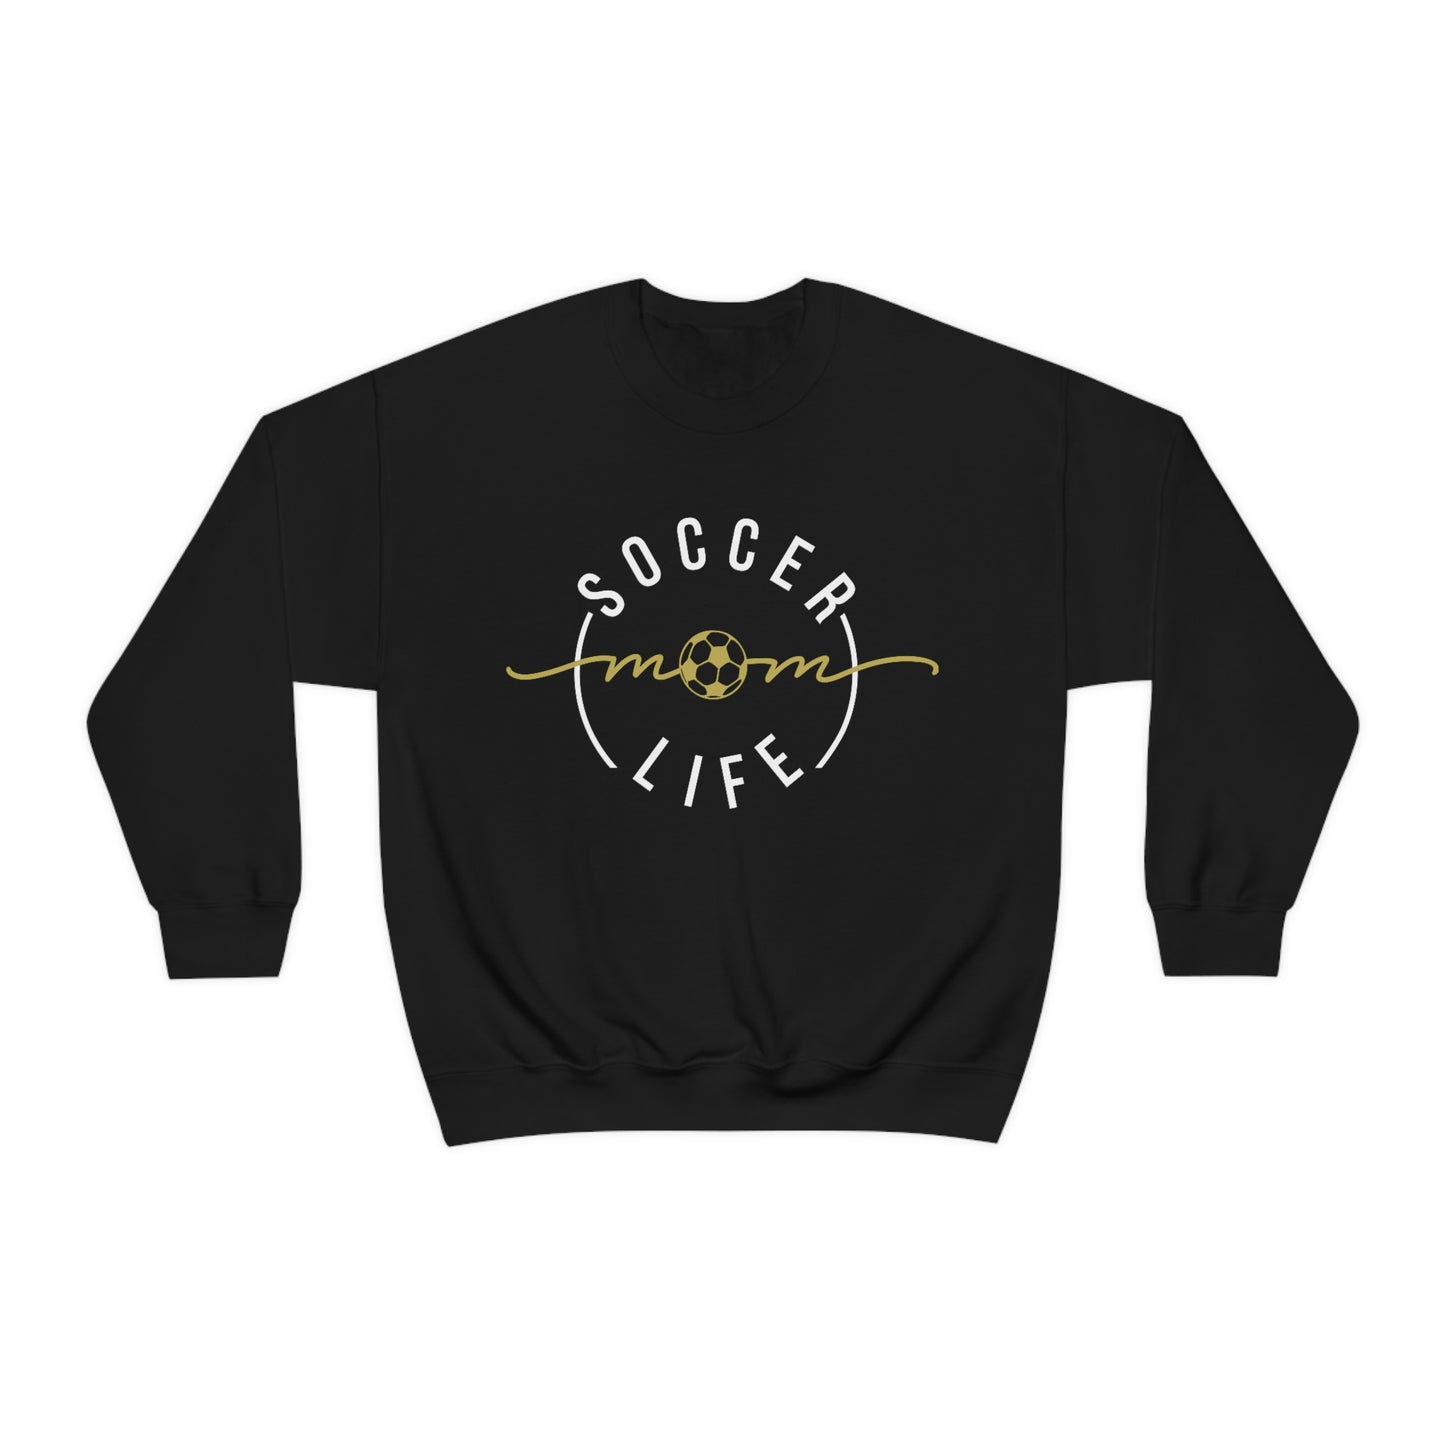 Soccer Mom Life - Sweatshirt (Black)